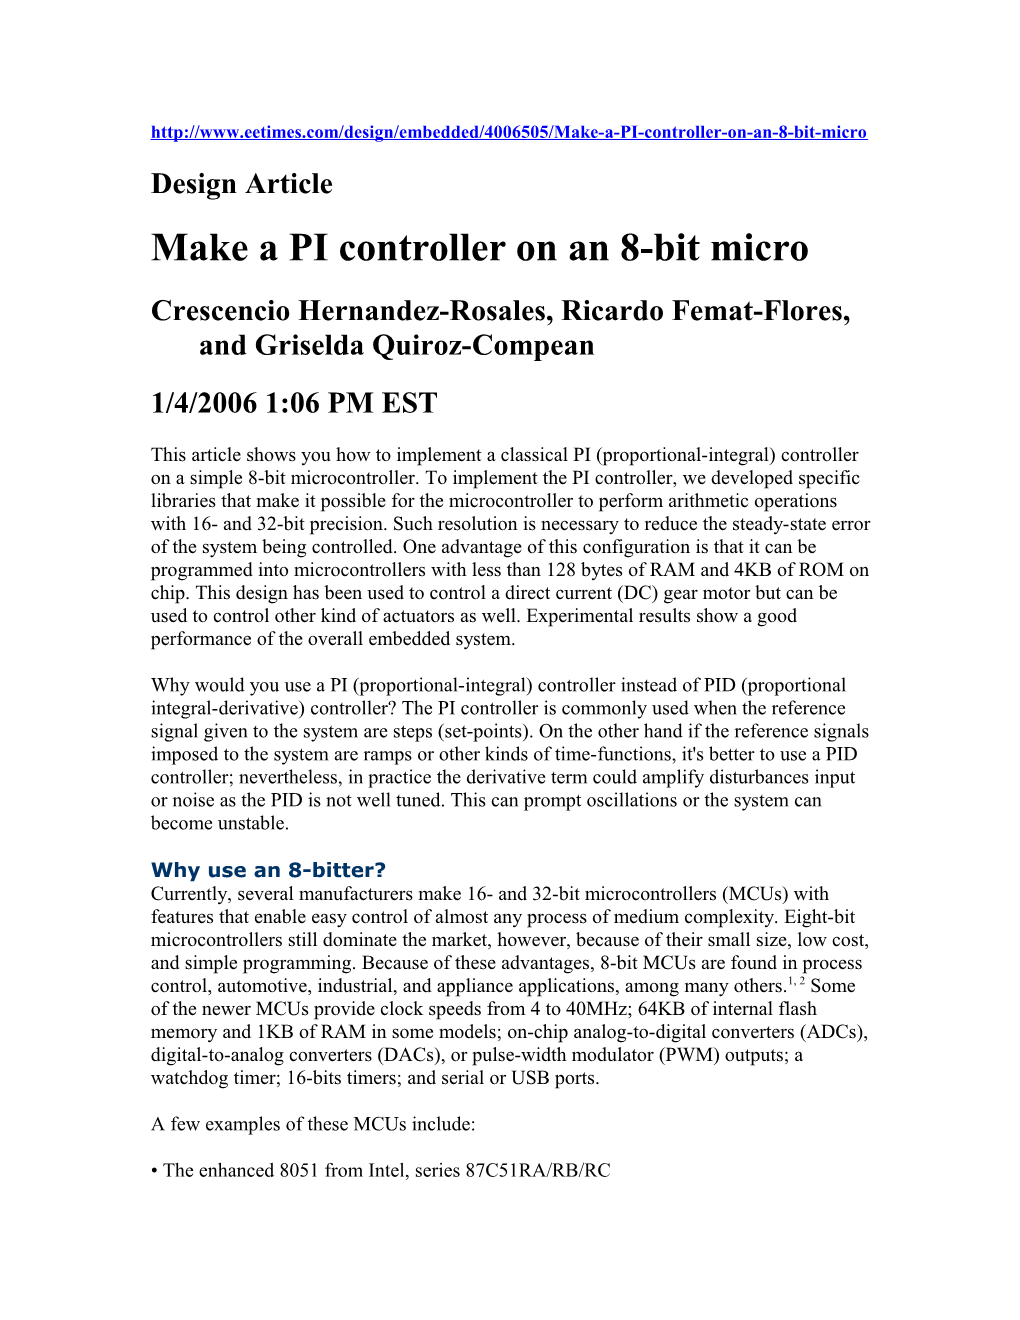 Make a PI Controller on an 8-Bit Micro